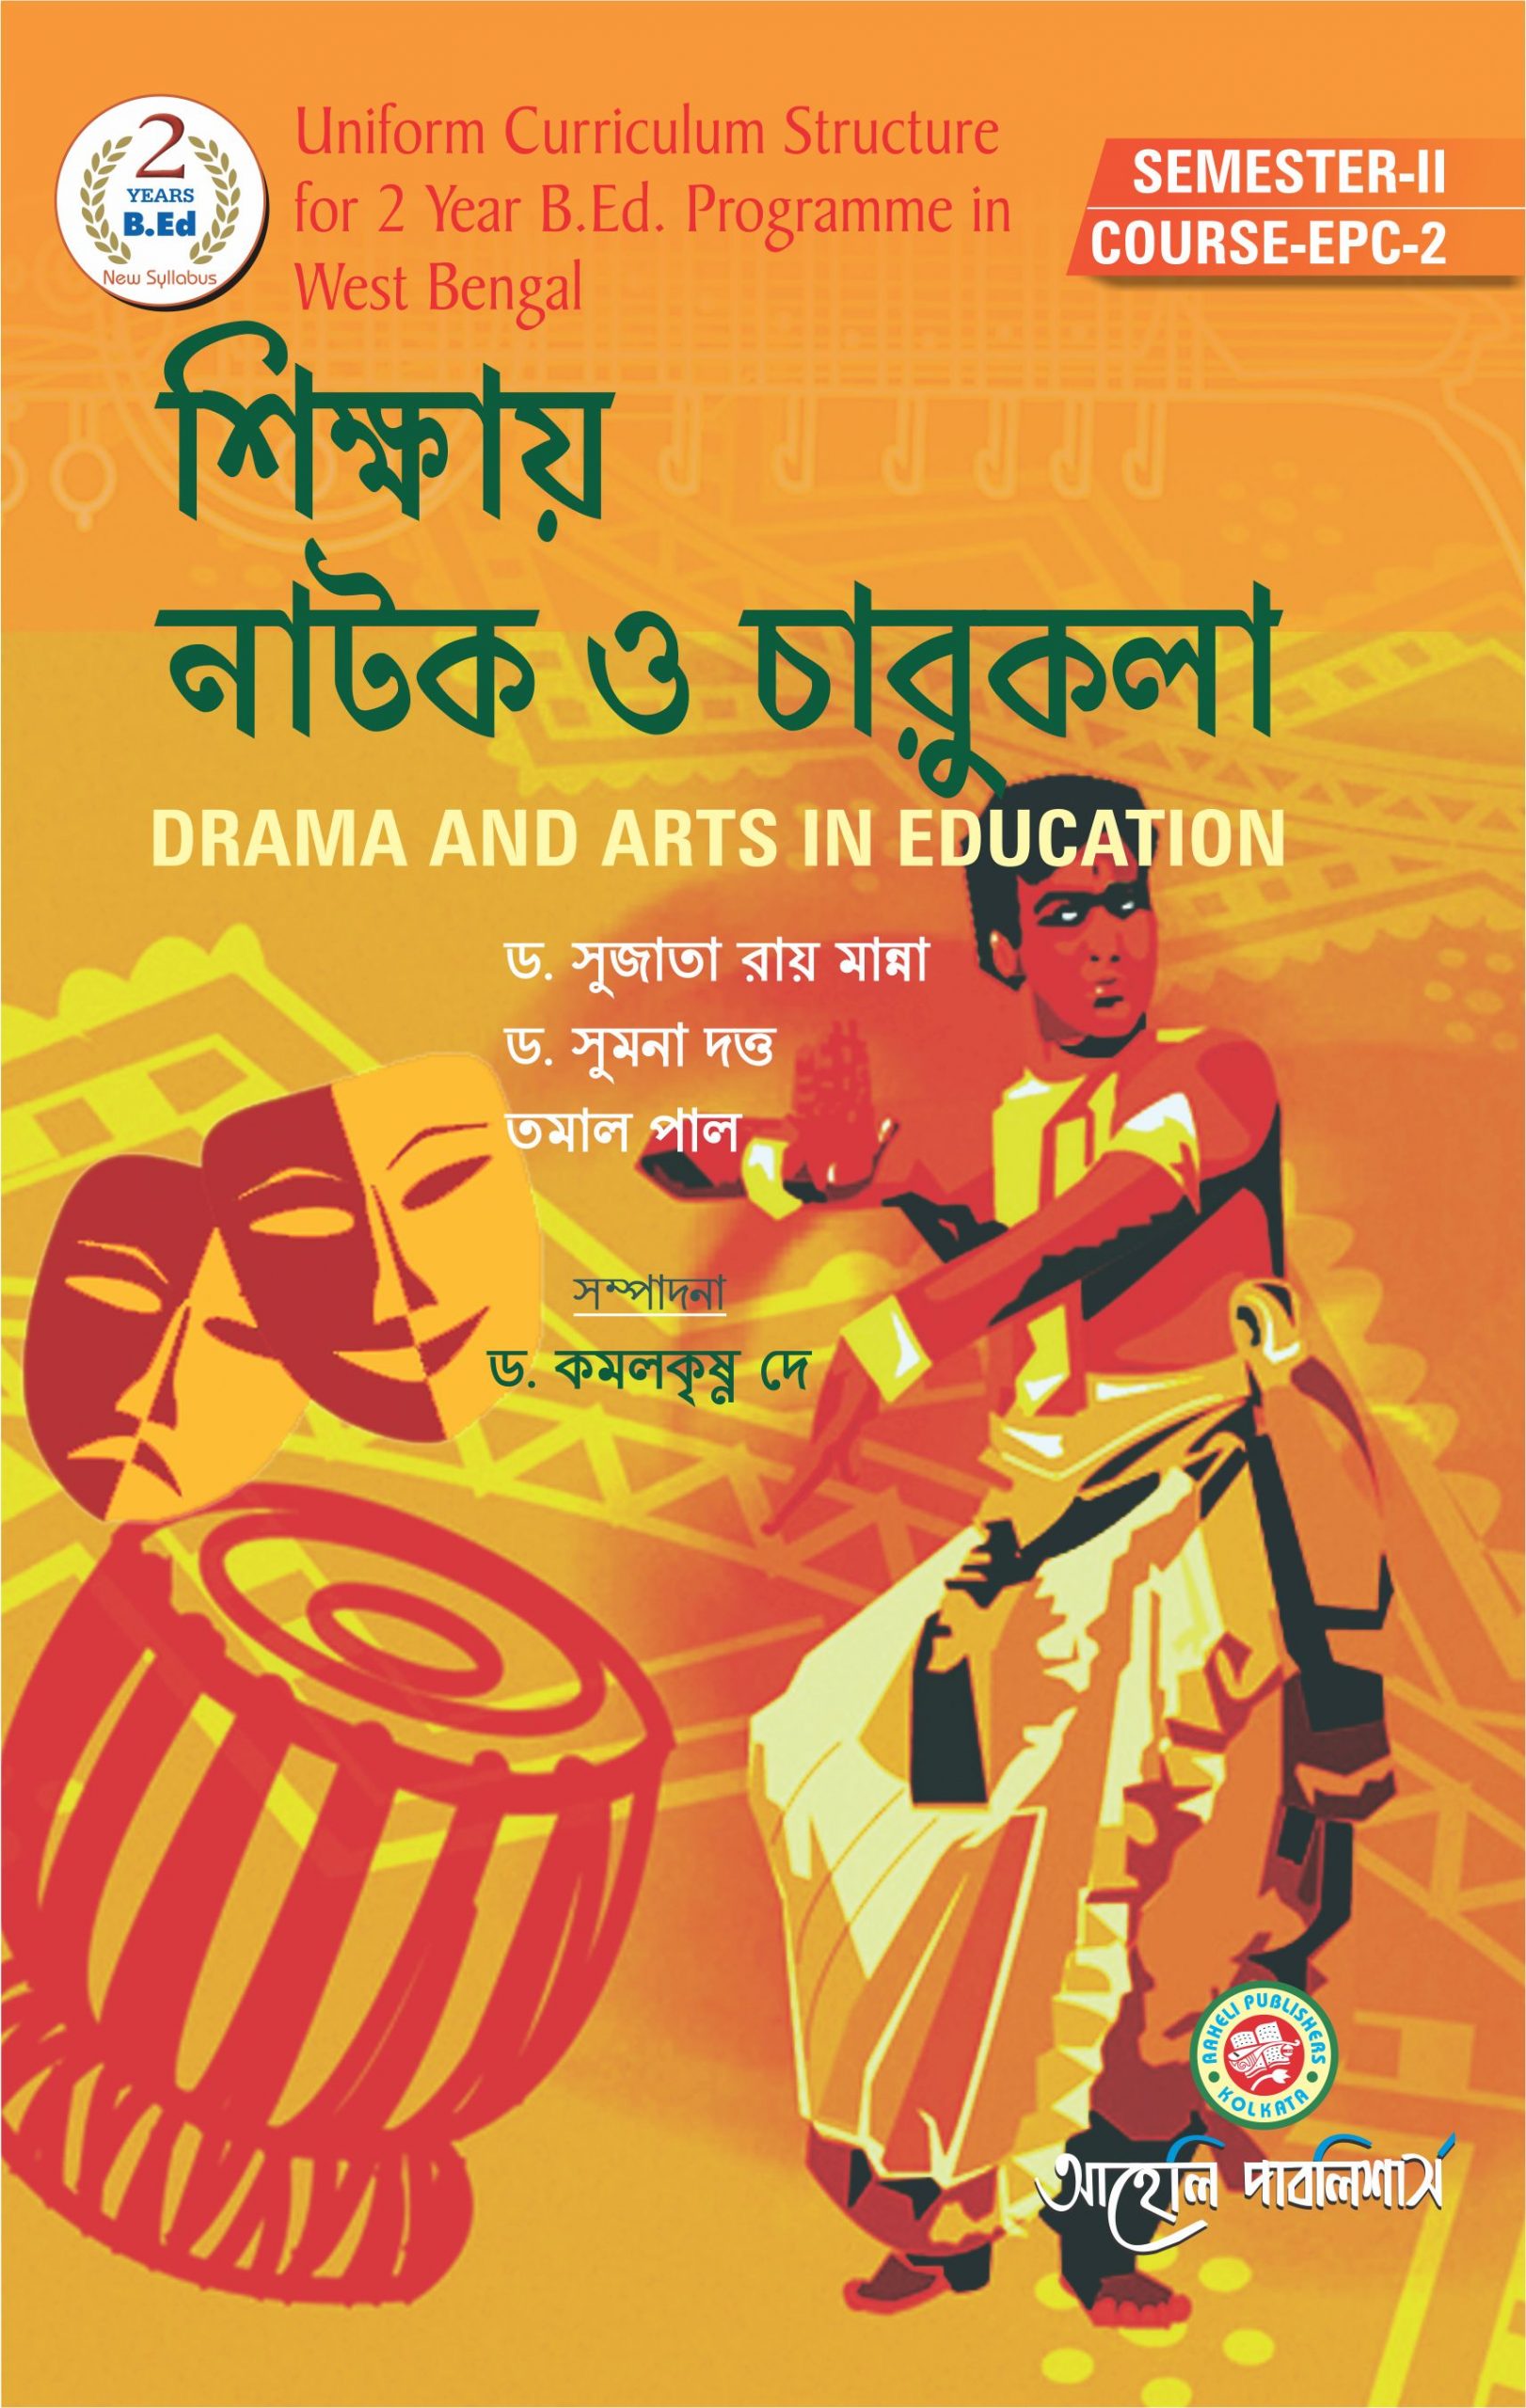 Sikkhai Natok O Charukala (Drama and Arts in Education) Bengali 2nd sem